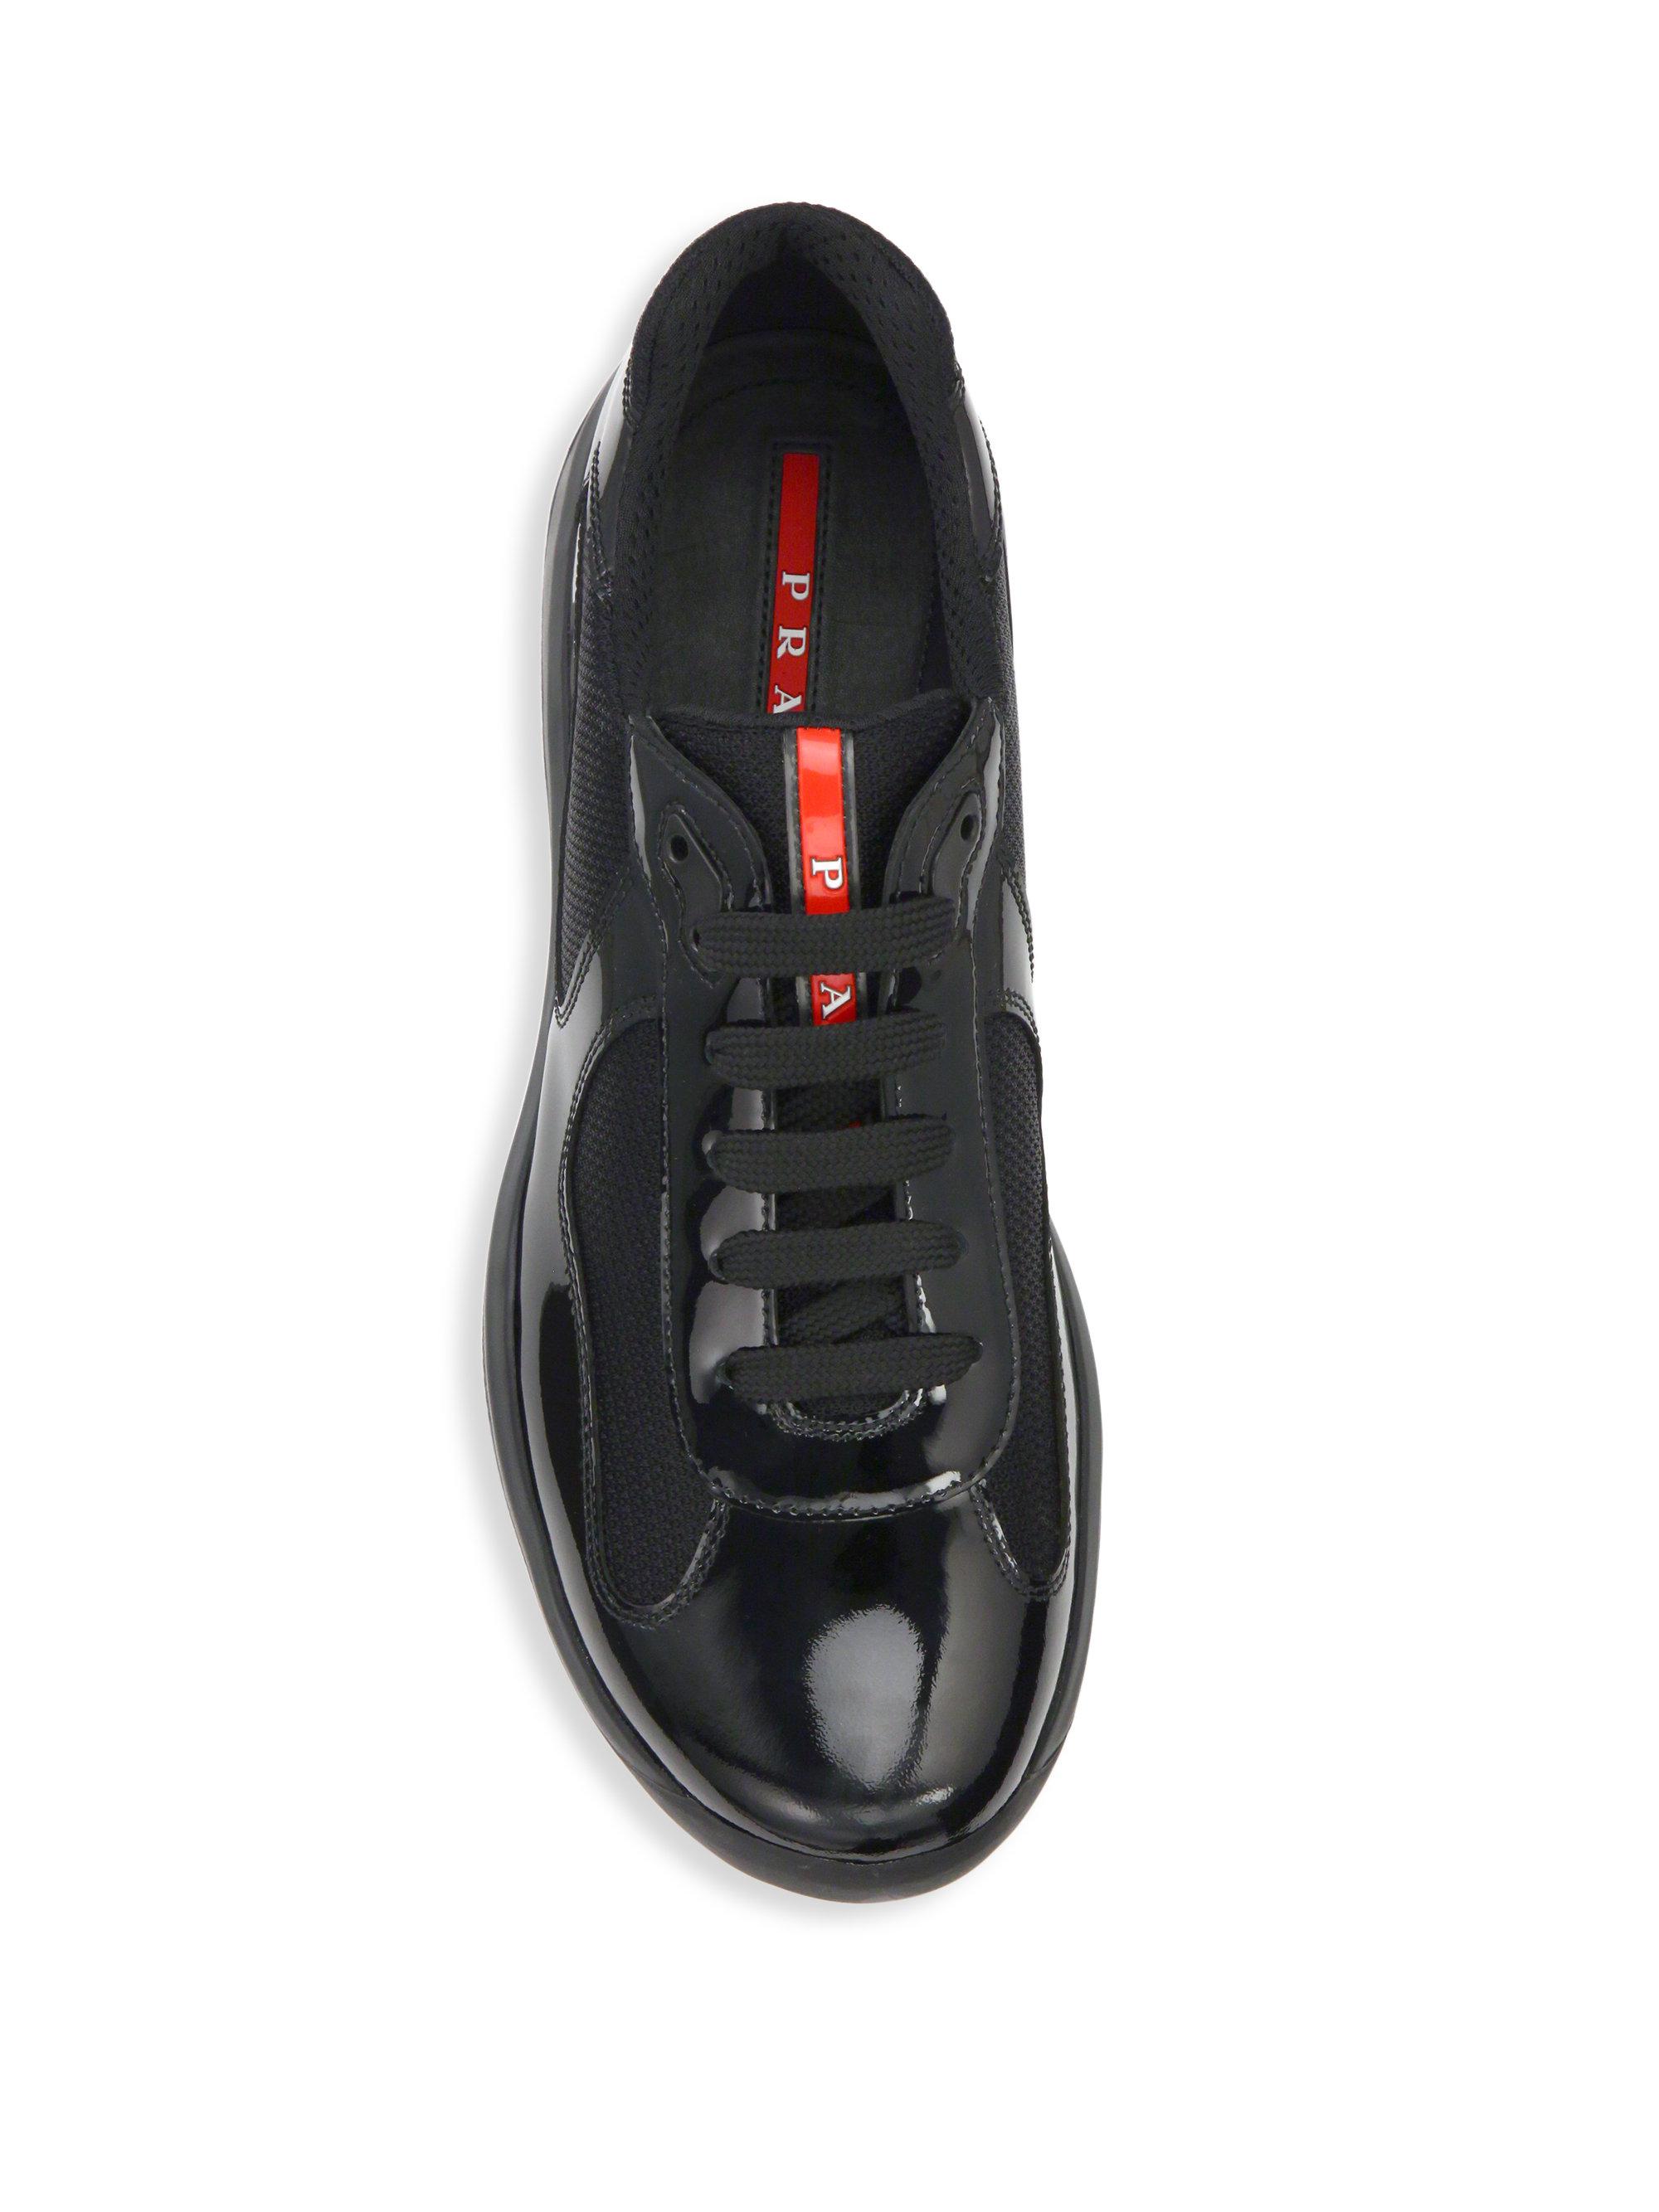 Prada Newac Patent Leather Sneakers in Black for Men - Lyst